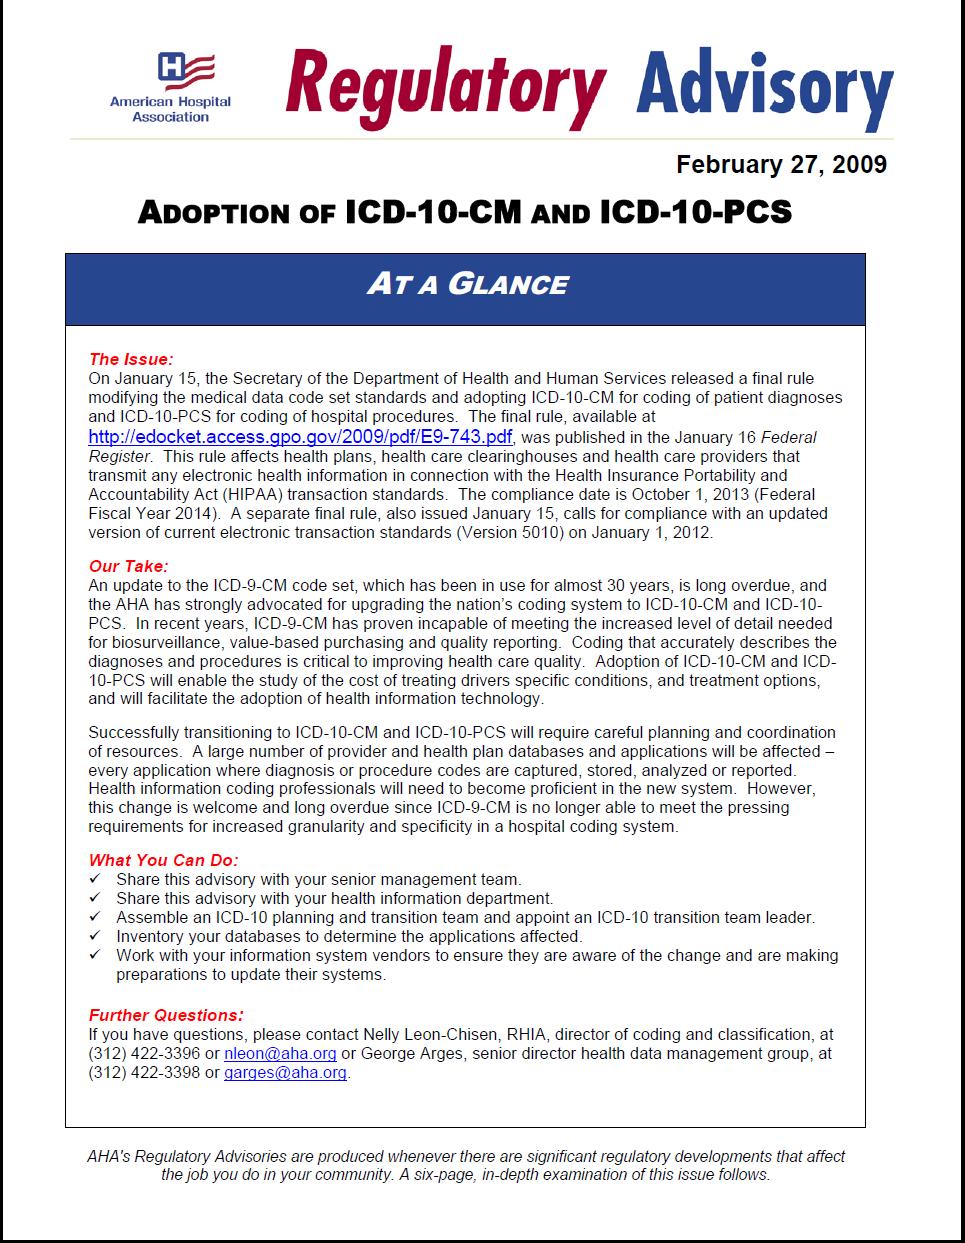 AHA Member Benefit Executive Briefing and Advisories HIPAA Code Set Rule: ICD-10